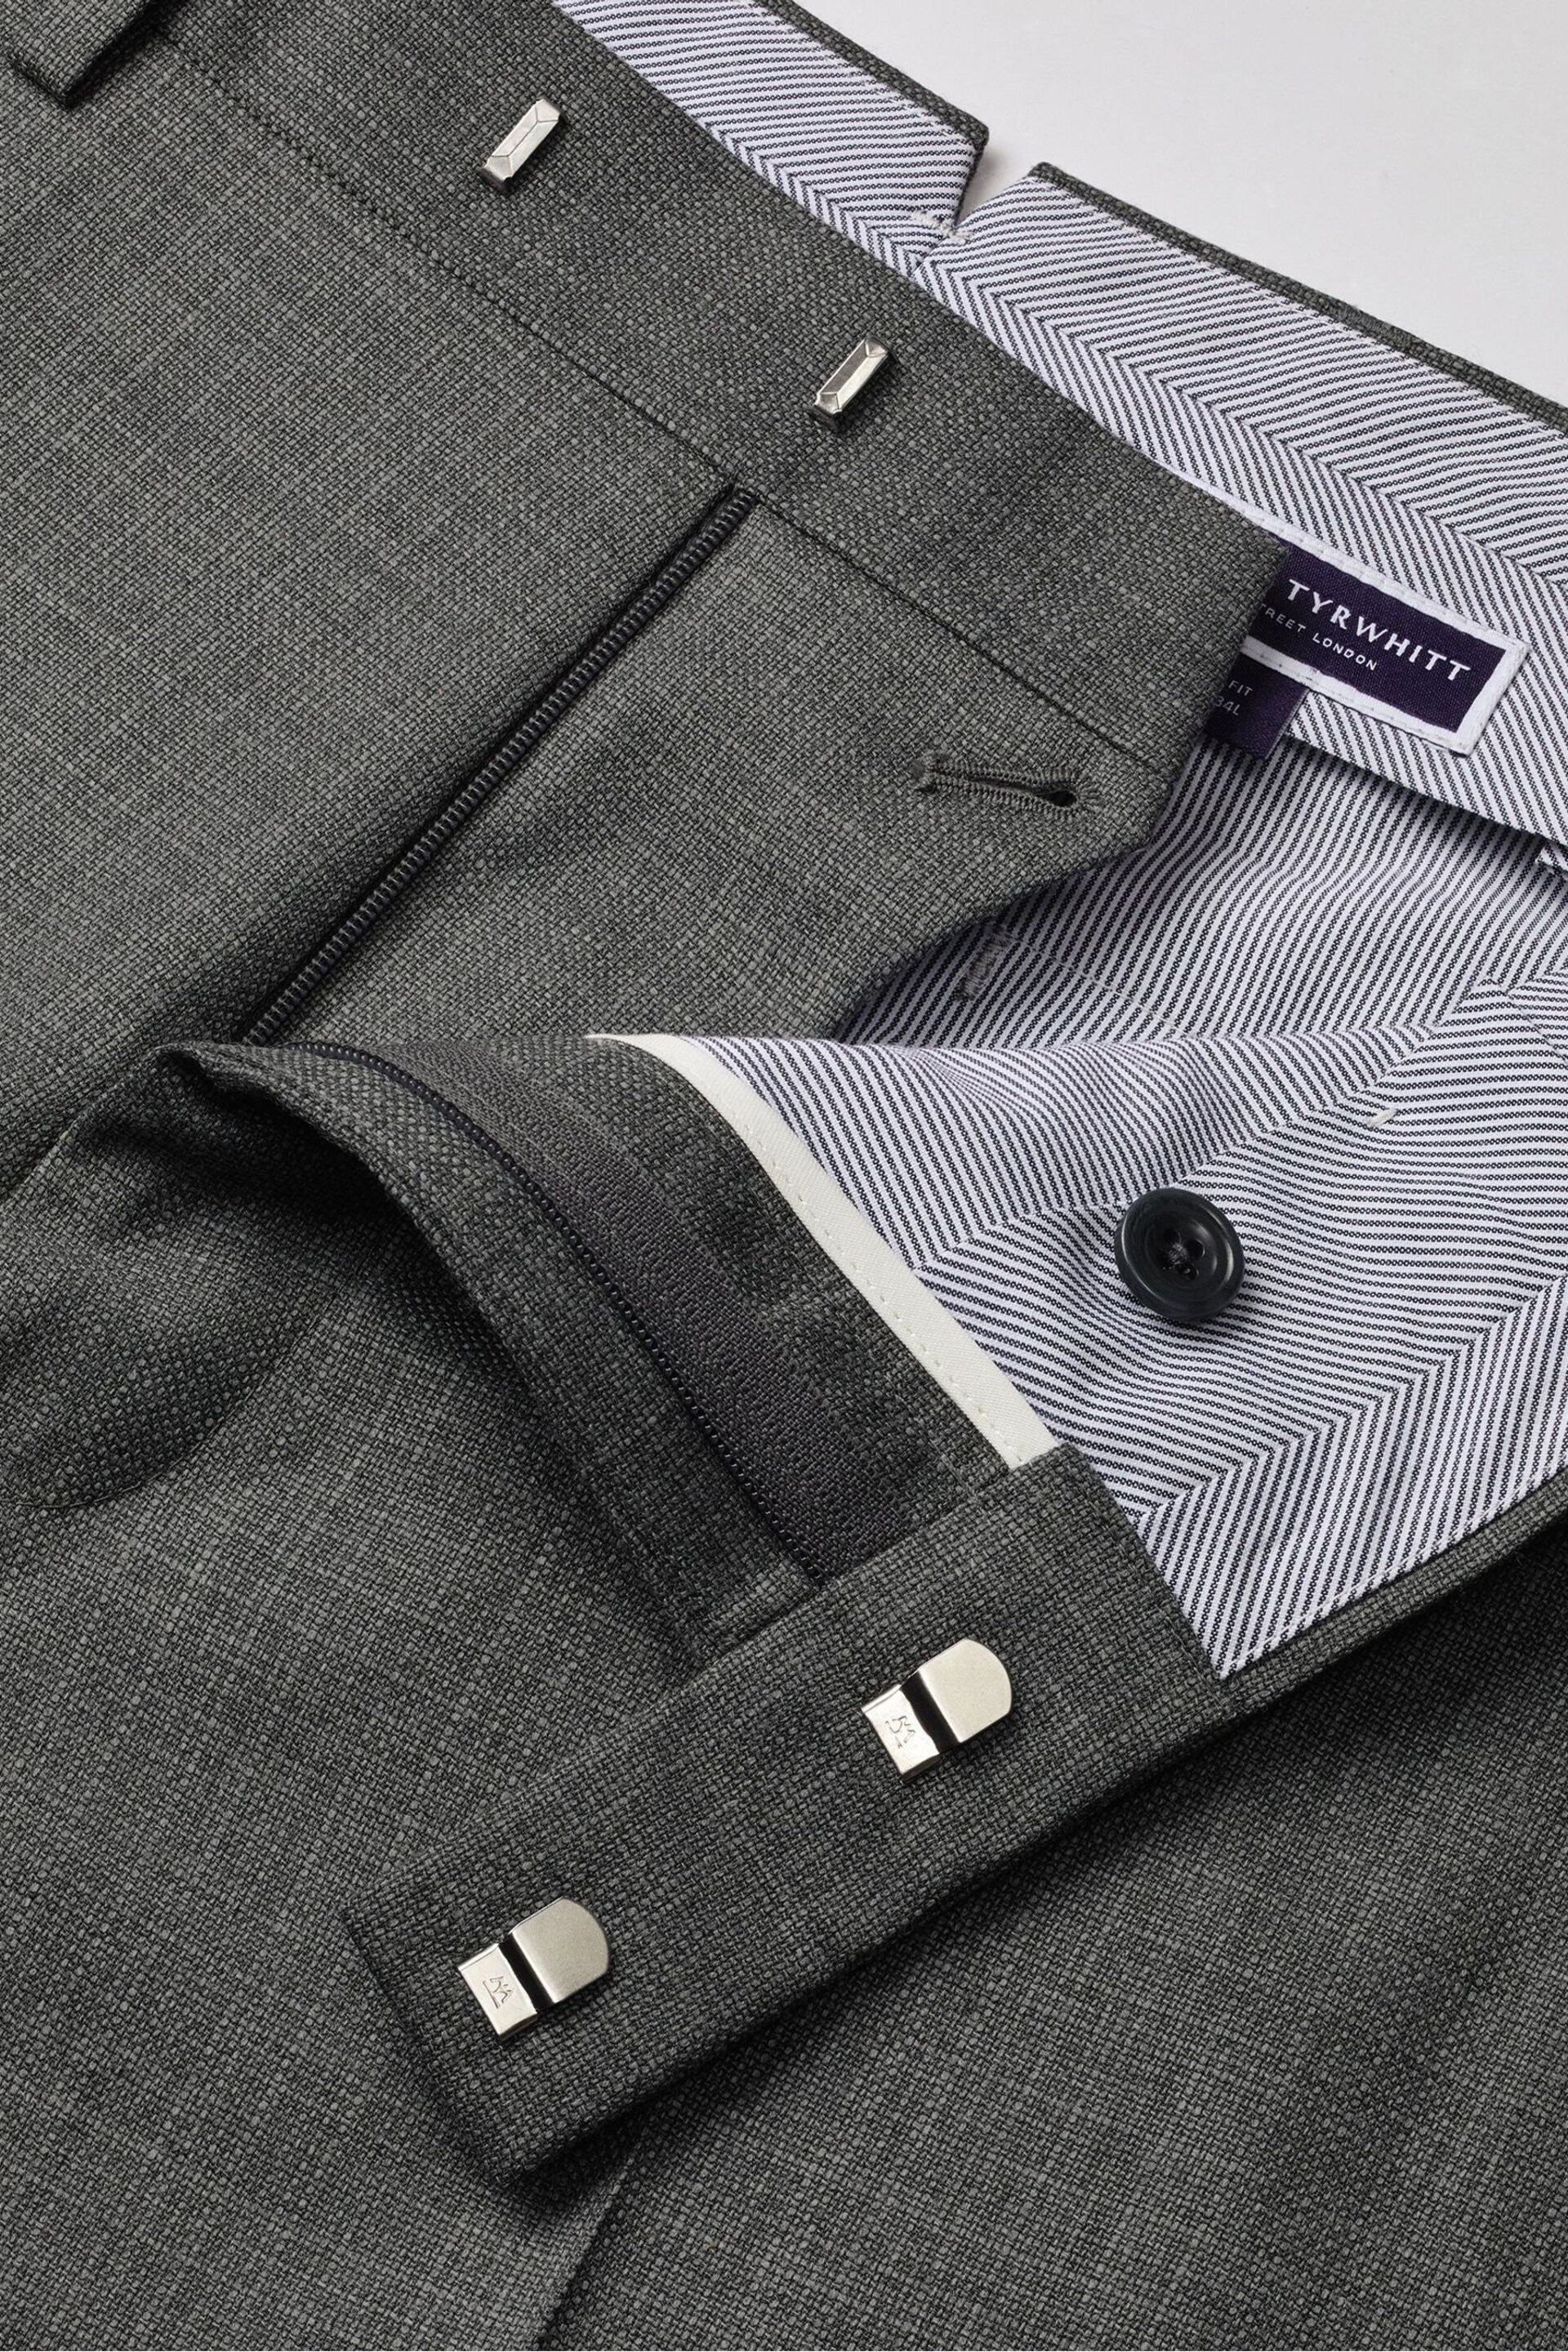 Charles Tyrwhitt Grey Slim Fit Italian Luxury Suit: Trousers - Image 4 of 4